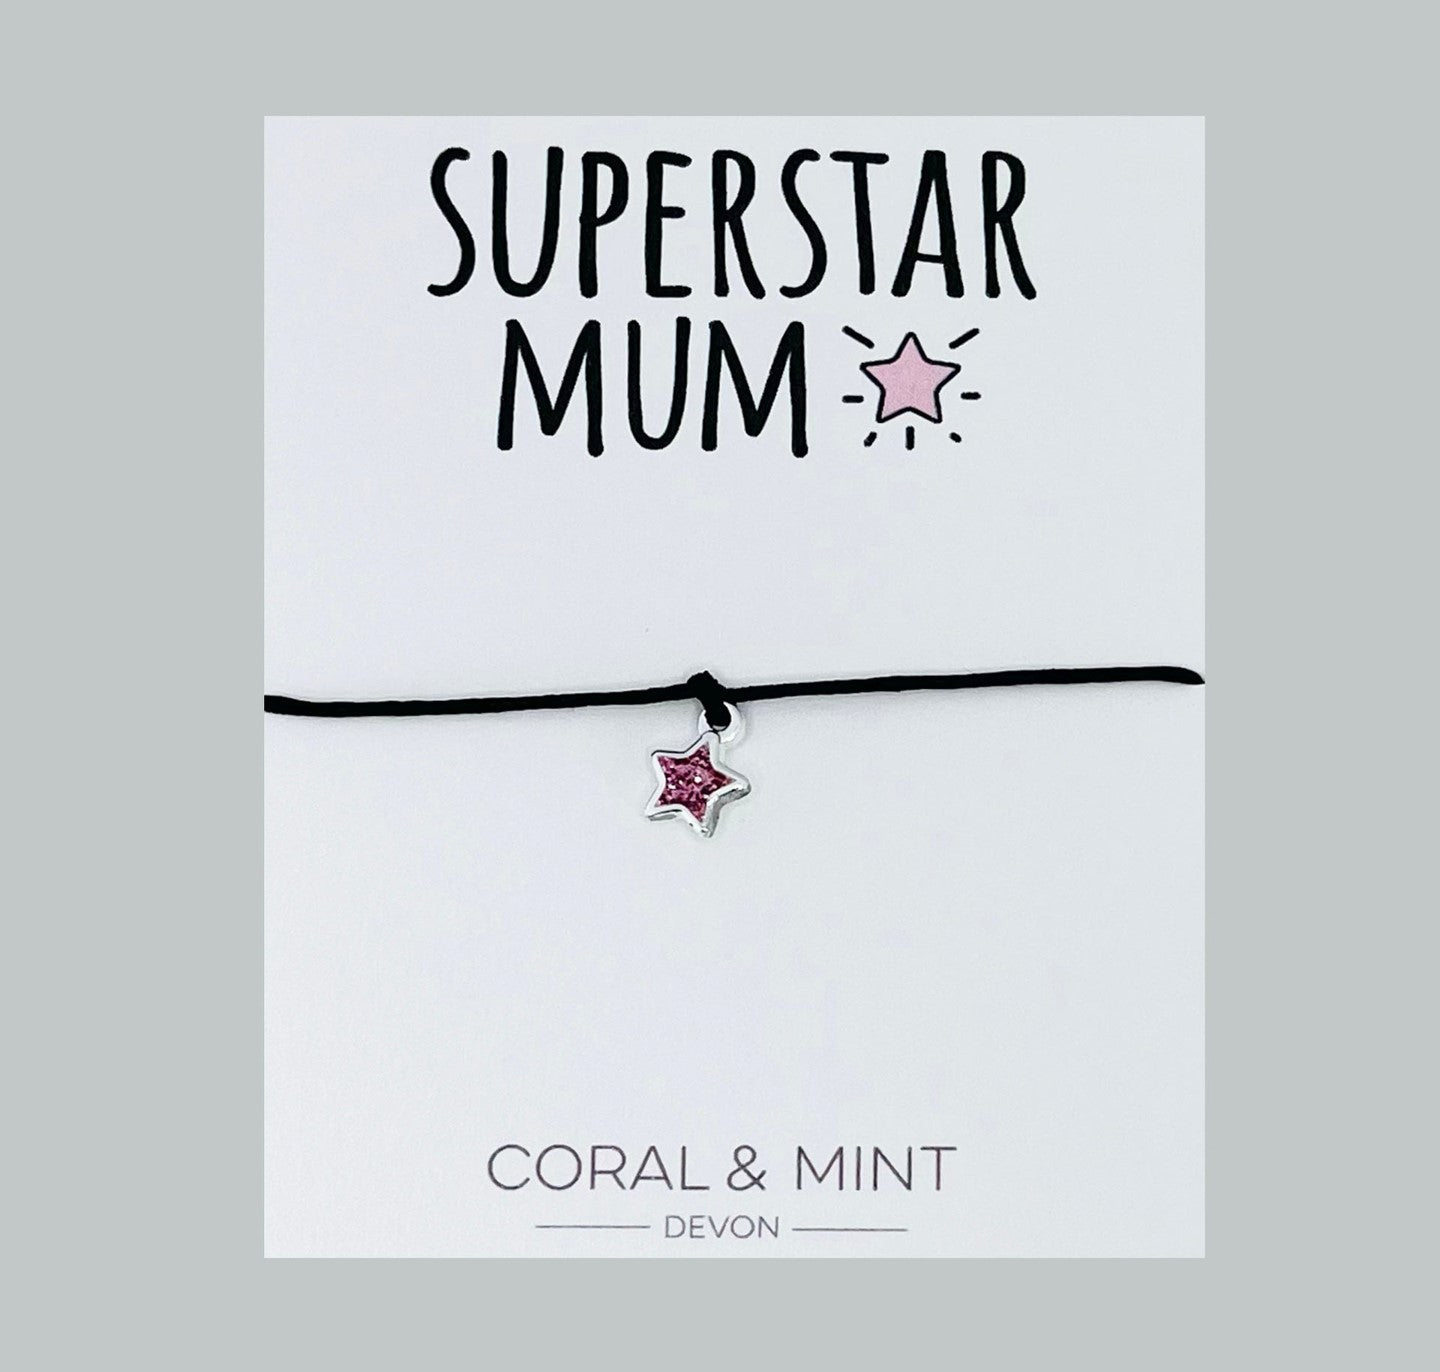 Superstar mum charm bracelet